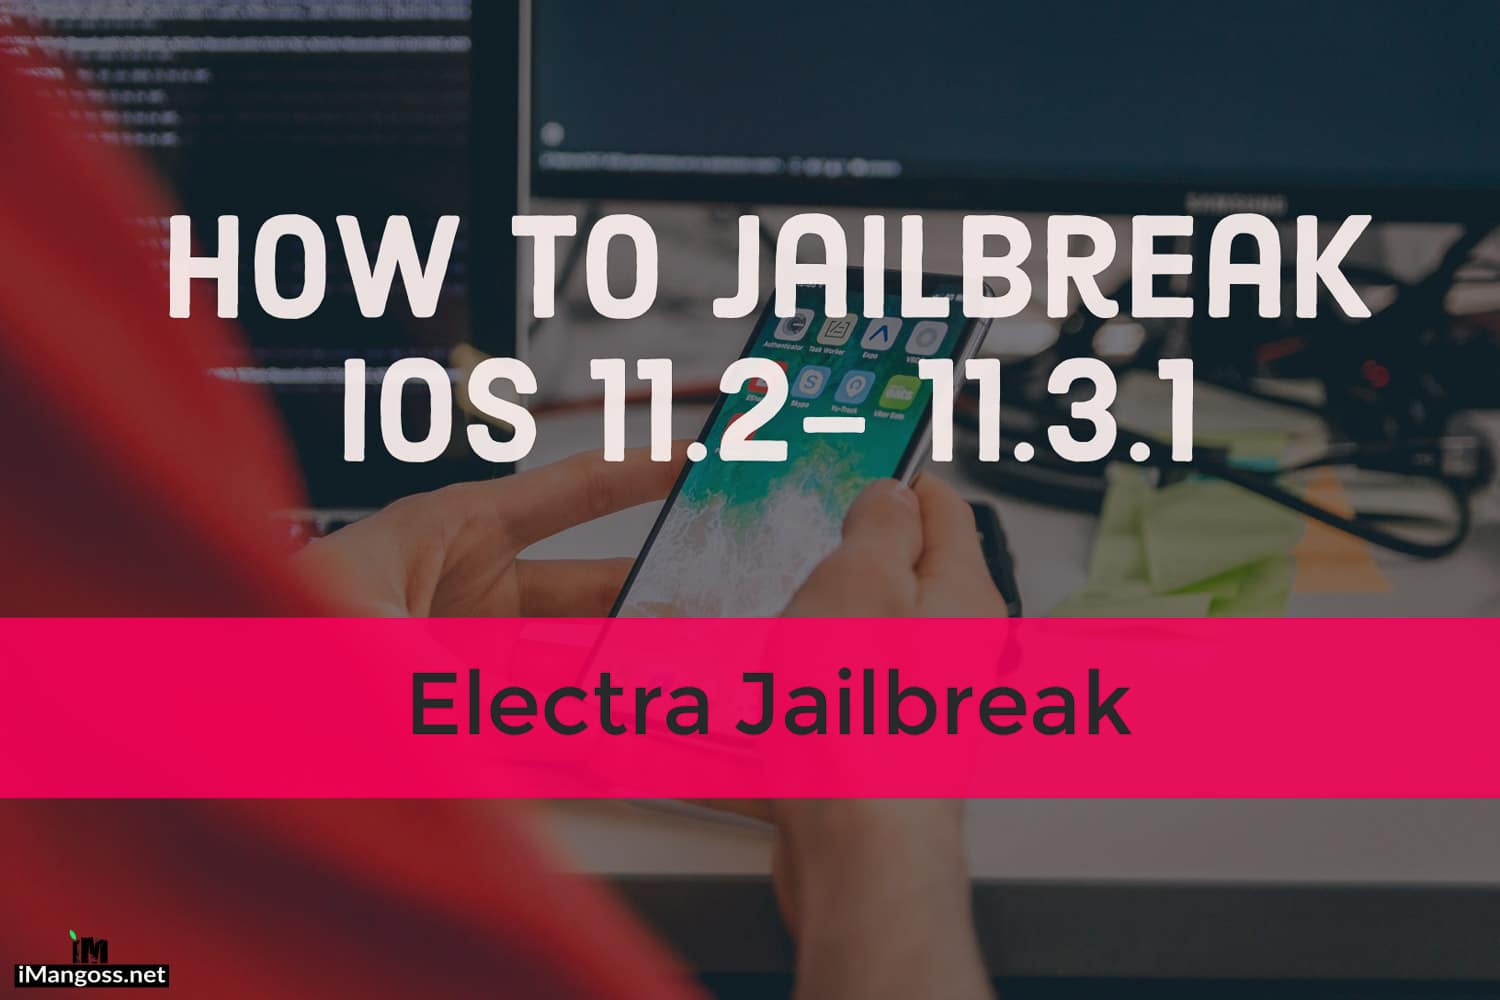 how to jailbreak ios 11.3.1 using electra